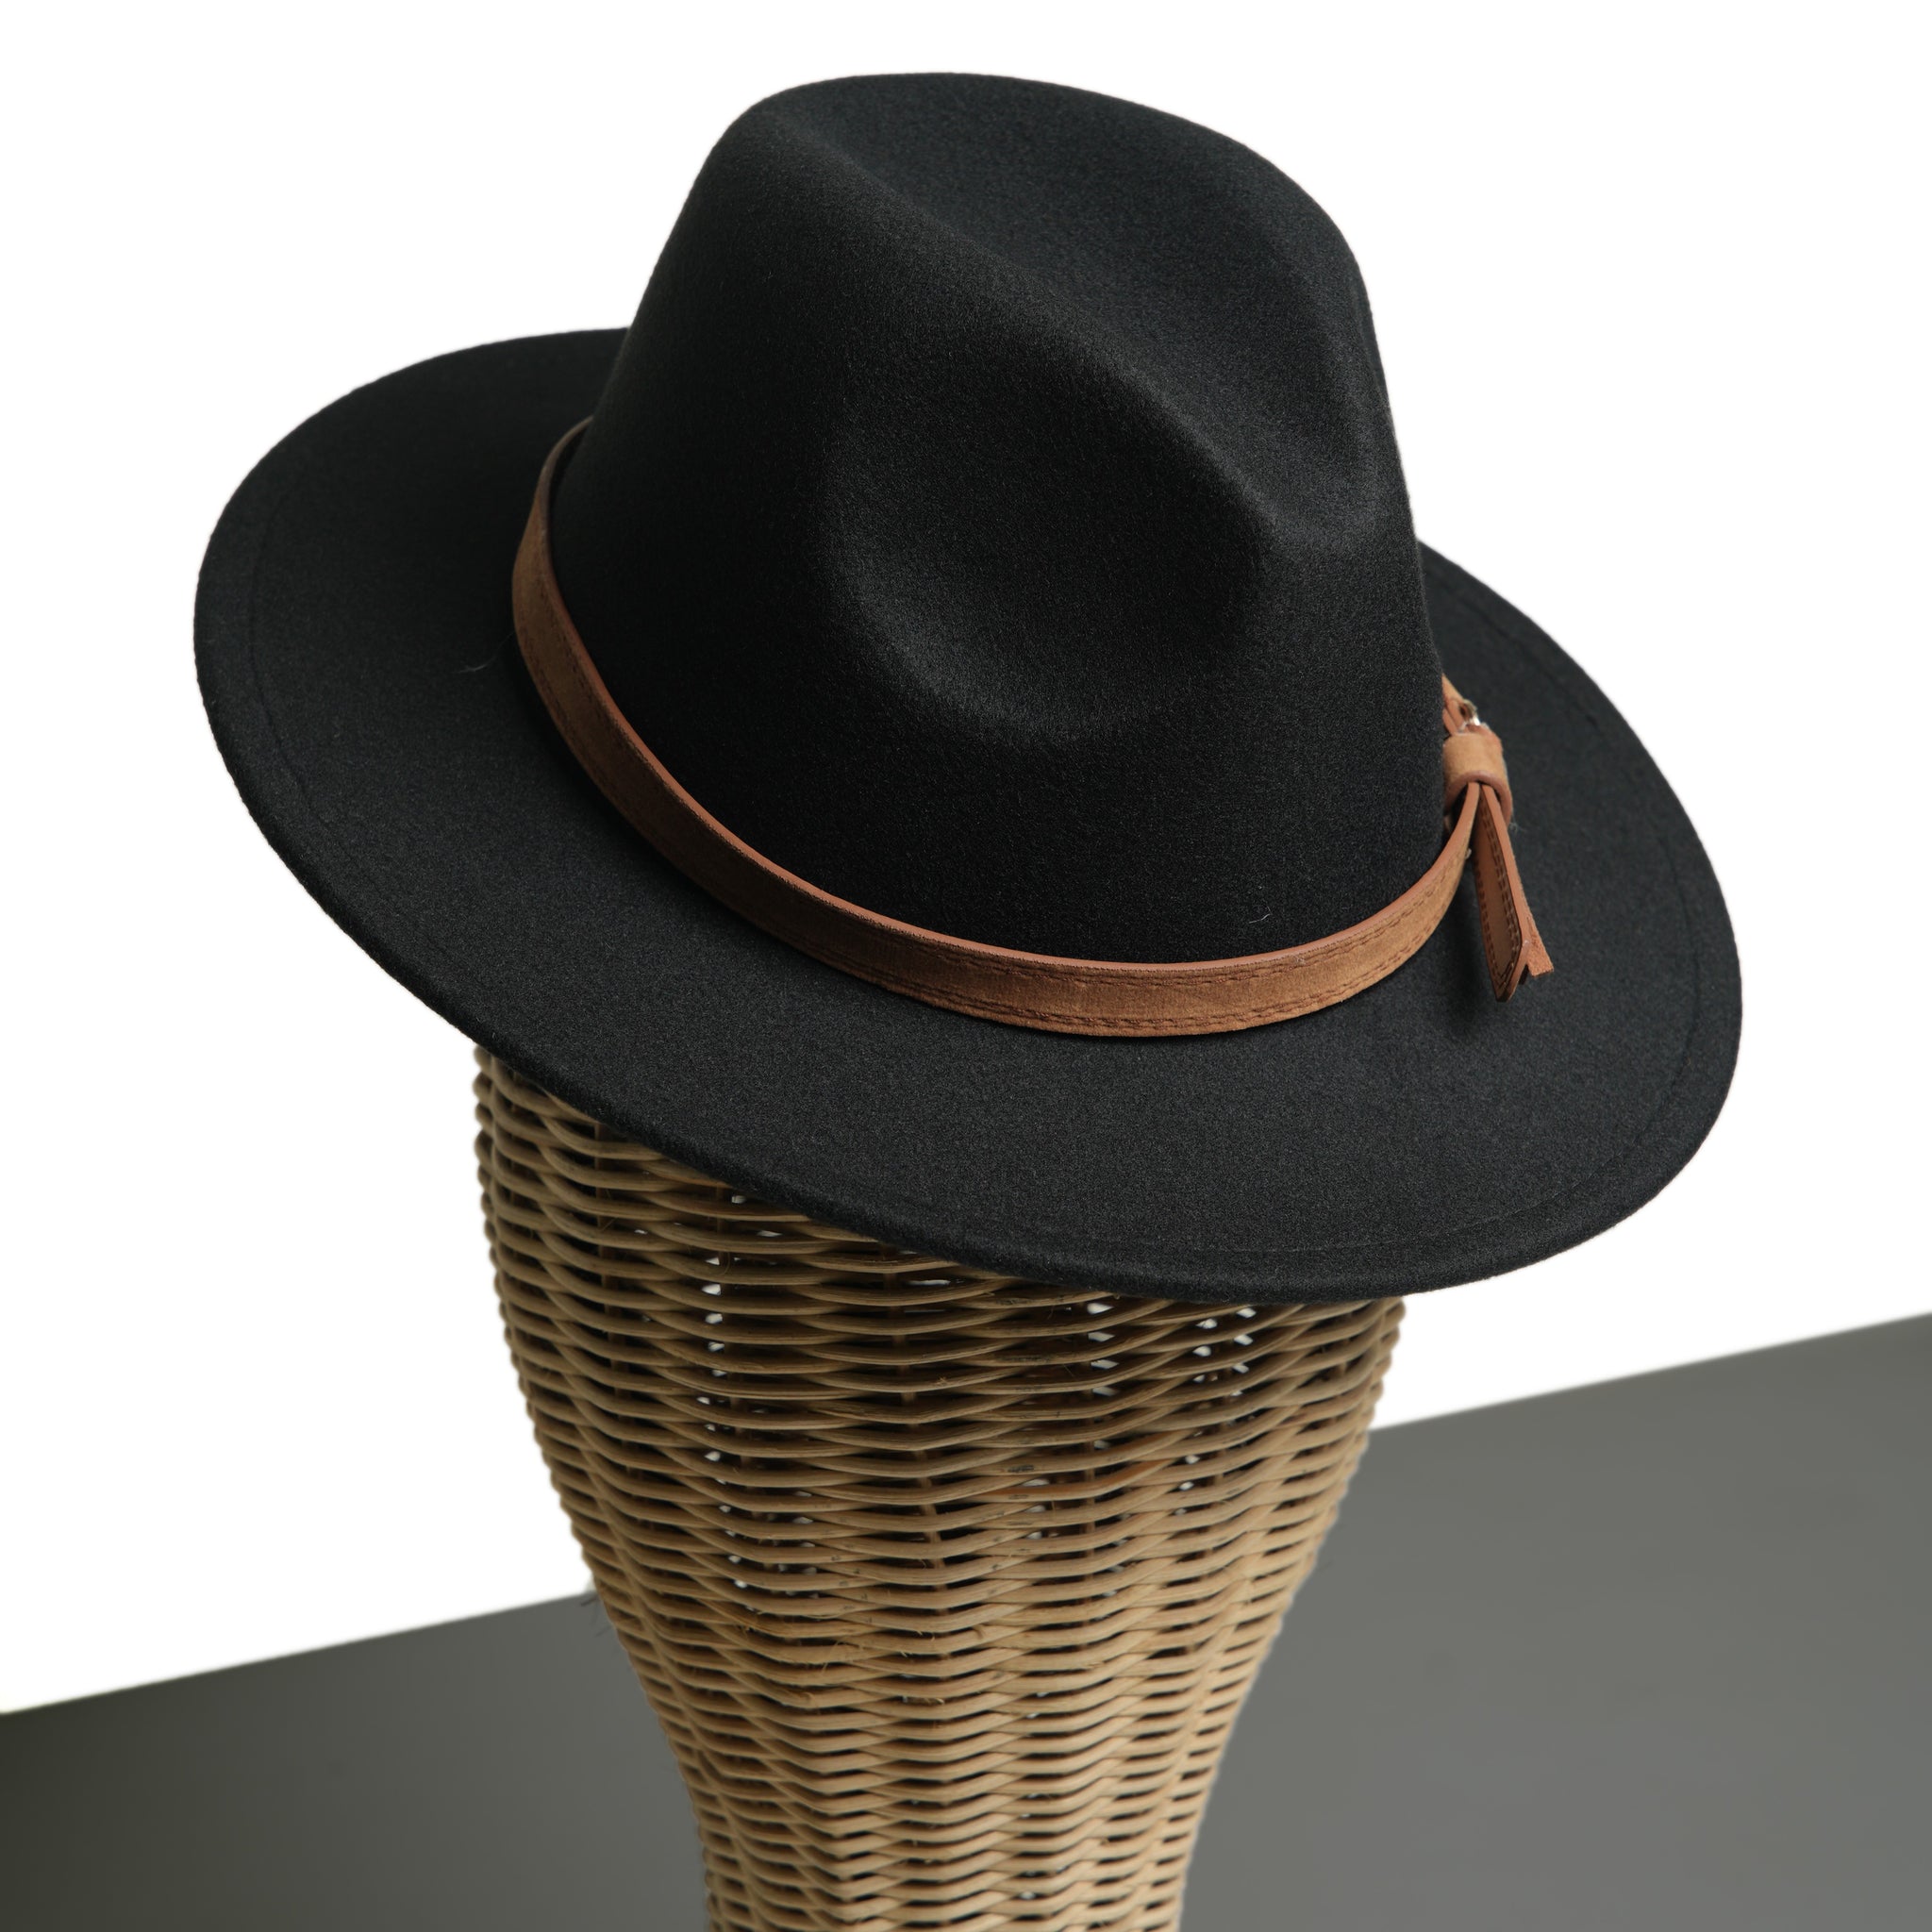 Chokore Pinched Fedora Hat with PU Leather Belt (Black)